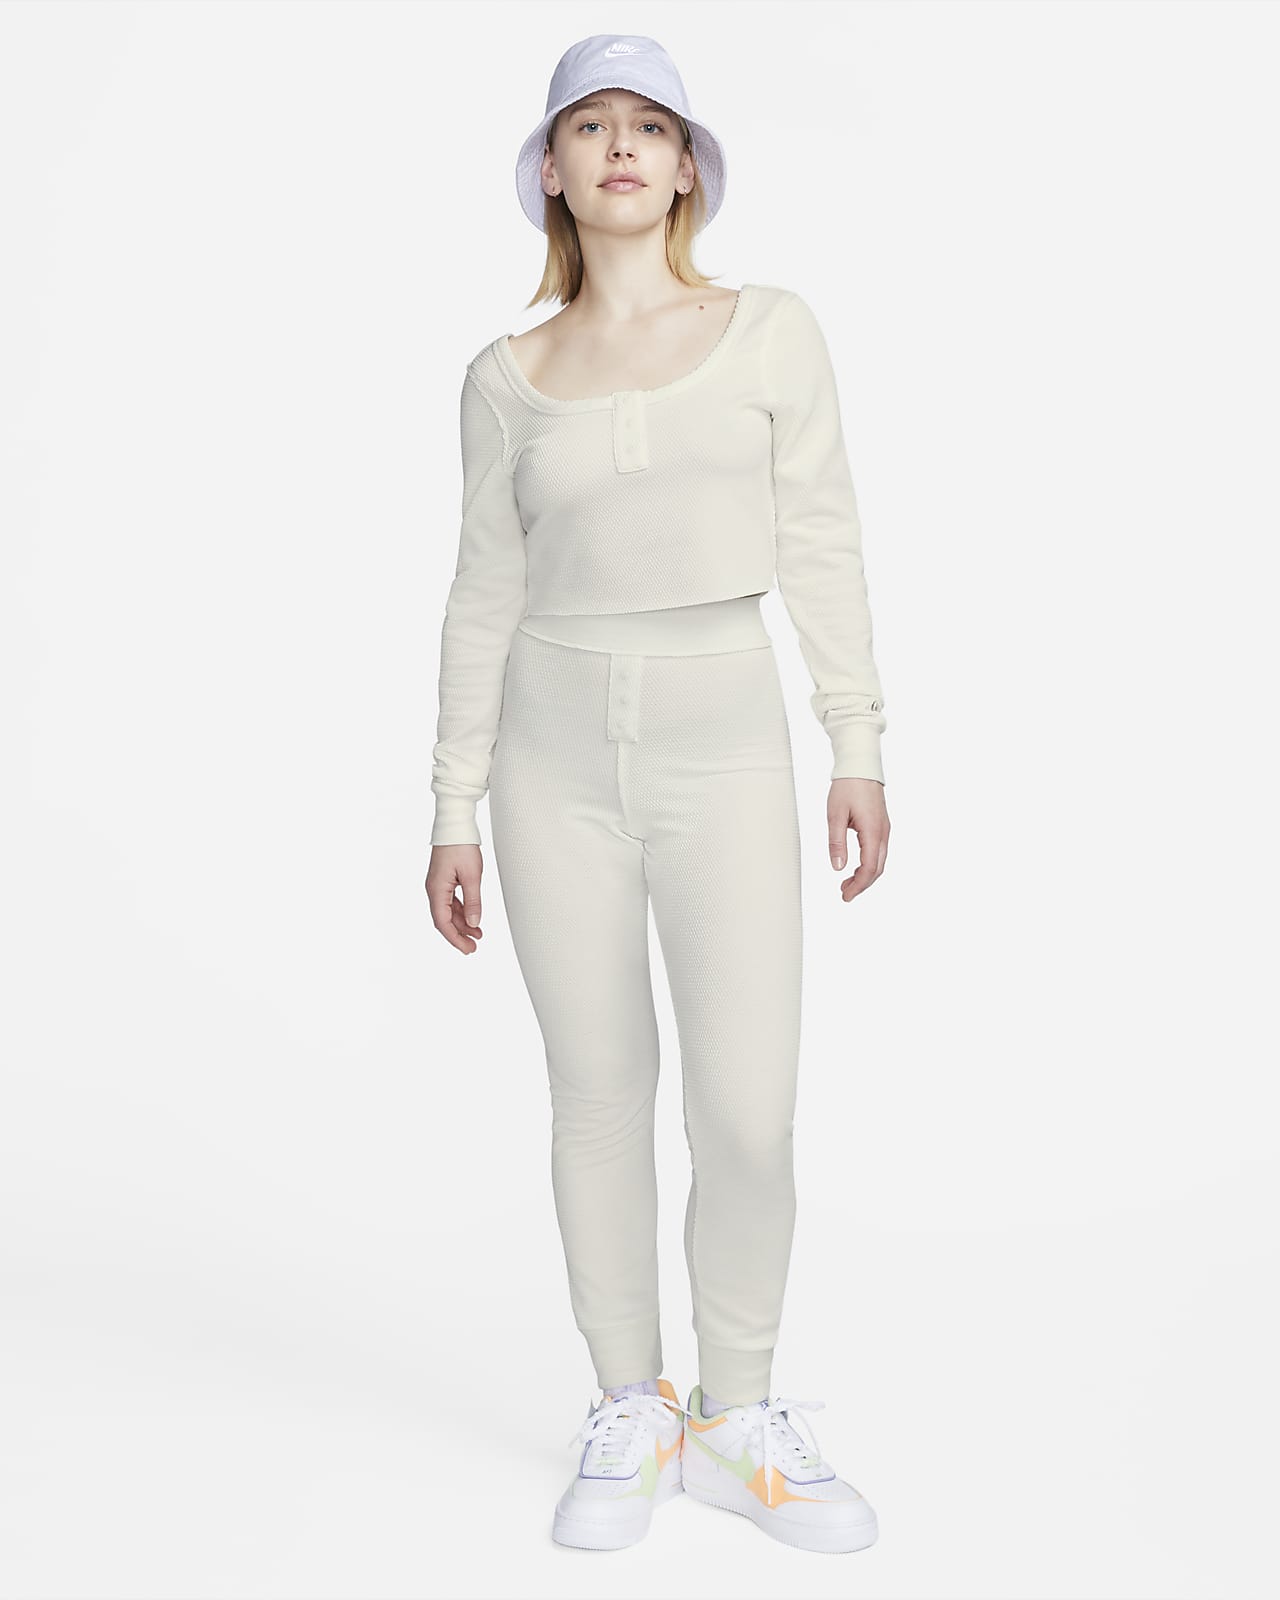 Billiges Originalprodukt Nike Sportswear Everyday Modern Women\'s Crop Long-Sleeve Top